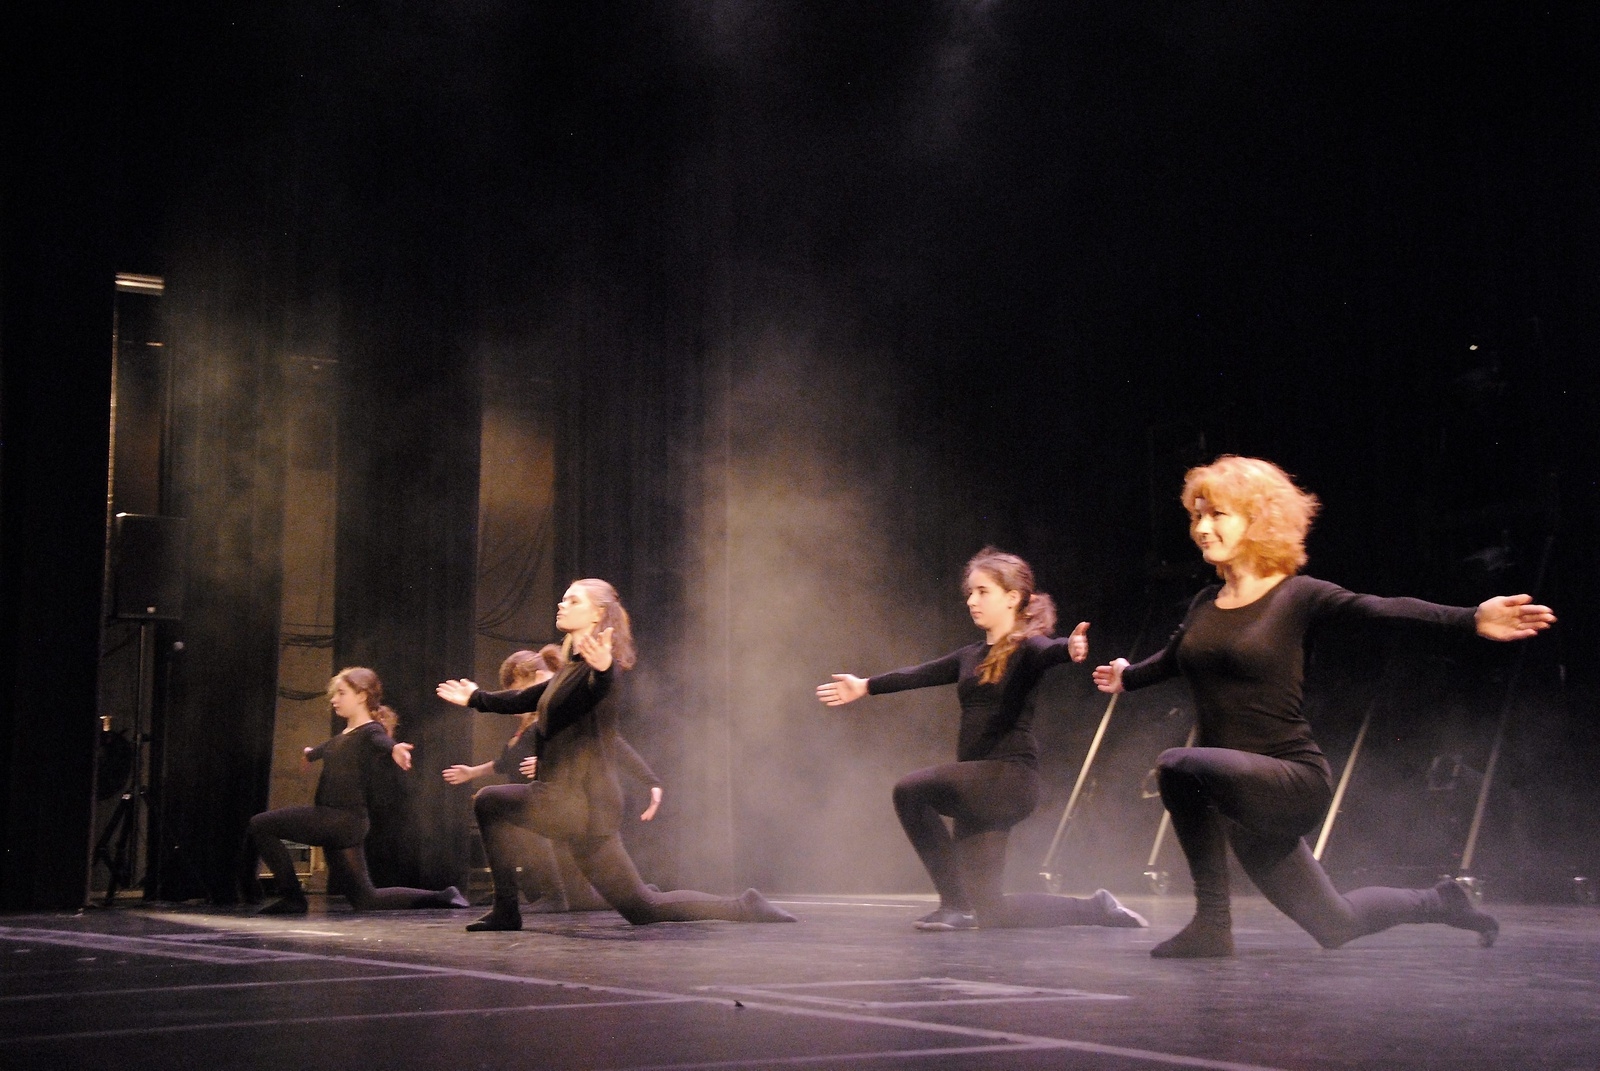 Vuxengruppen i klassisk balett framförde ”Dance of the dark knights” 			           Foto: Joel Snöbohm